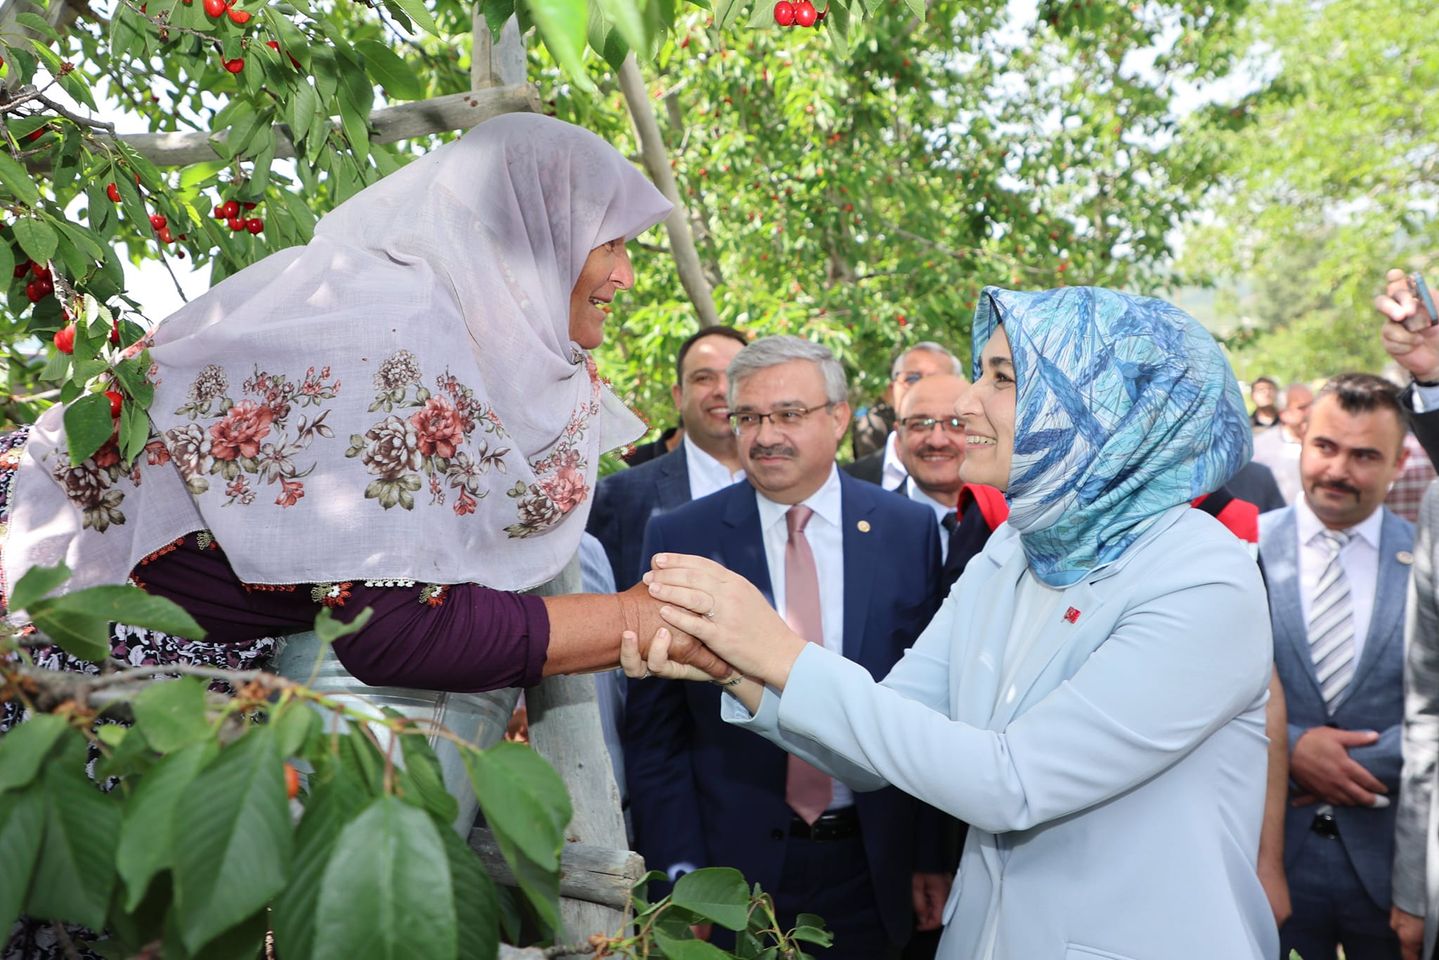 Kırca Köyü Meyve Alım Merkezi Hizmete Girdi